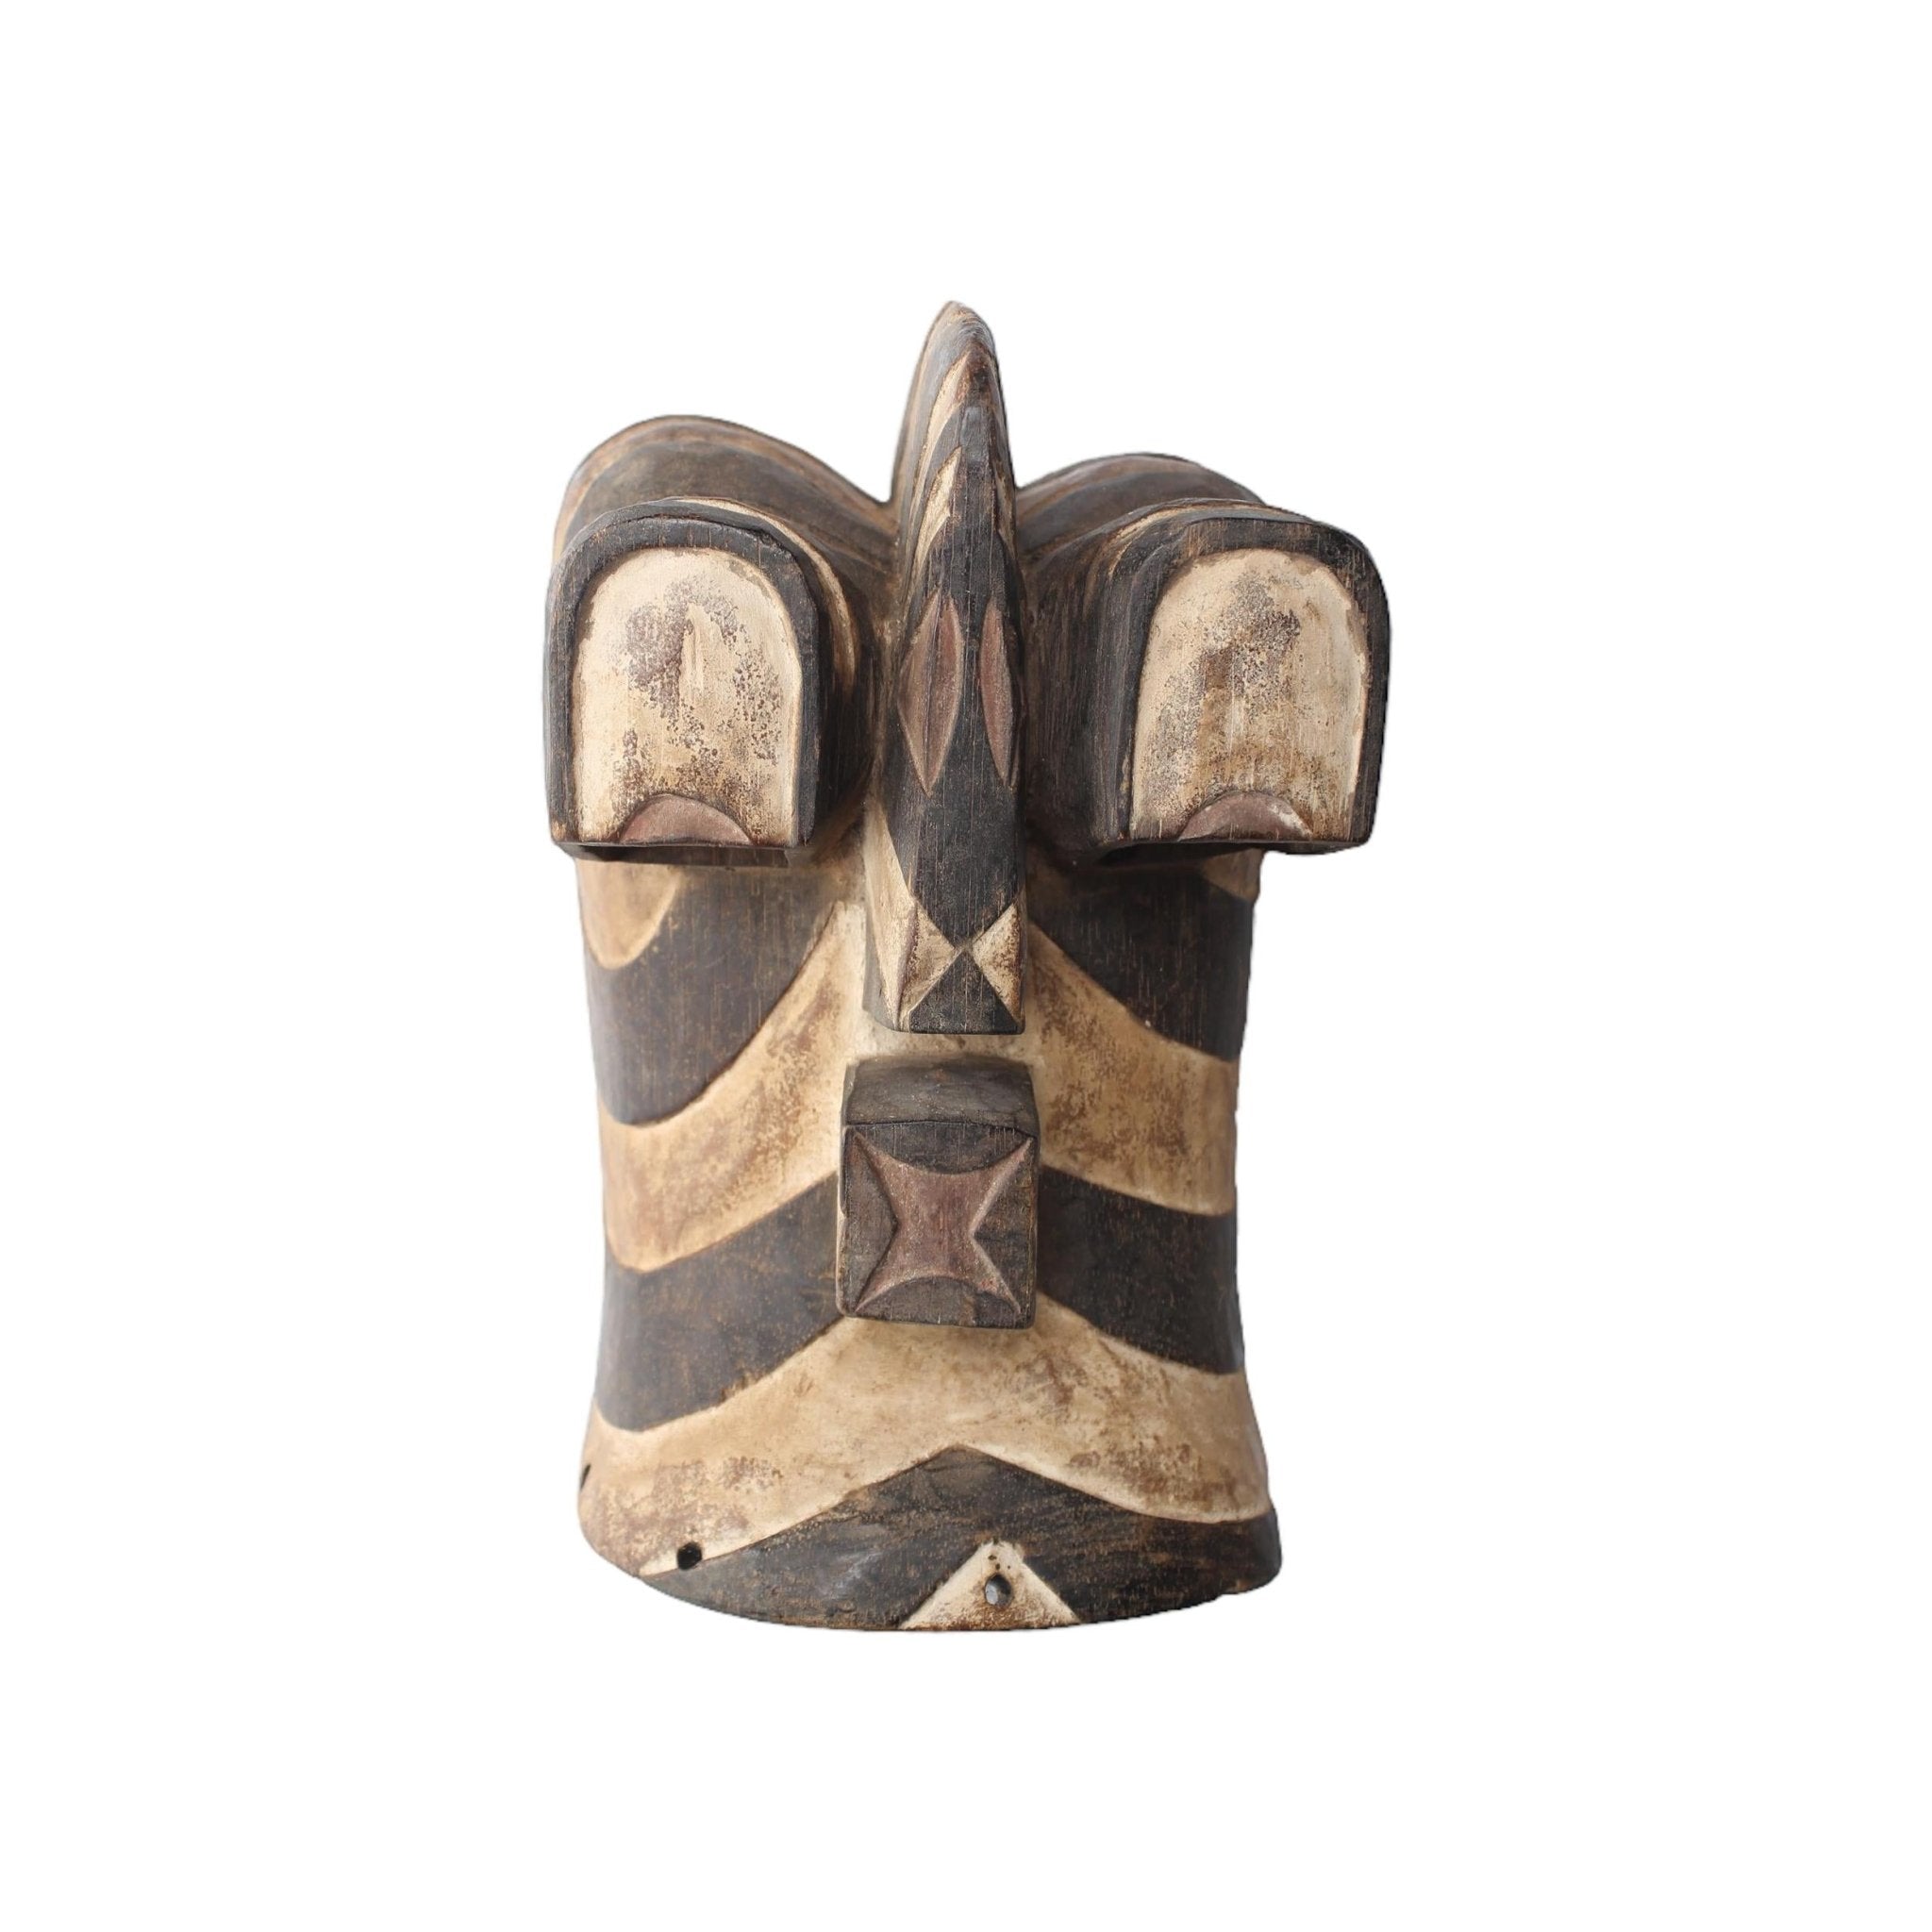 Basonge/Songye Tribe Mask ~11.8" Tall - African Angel Art - Mask